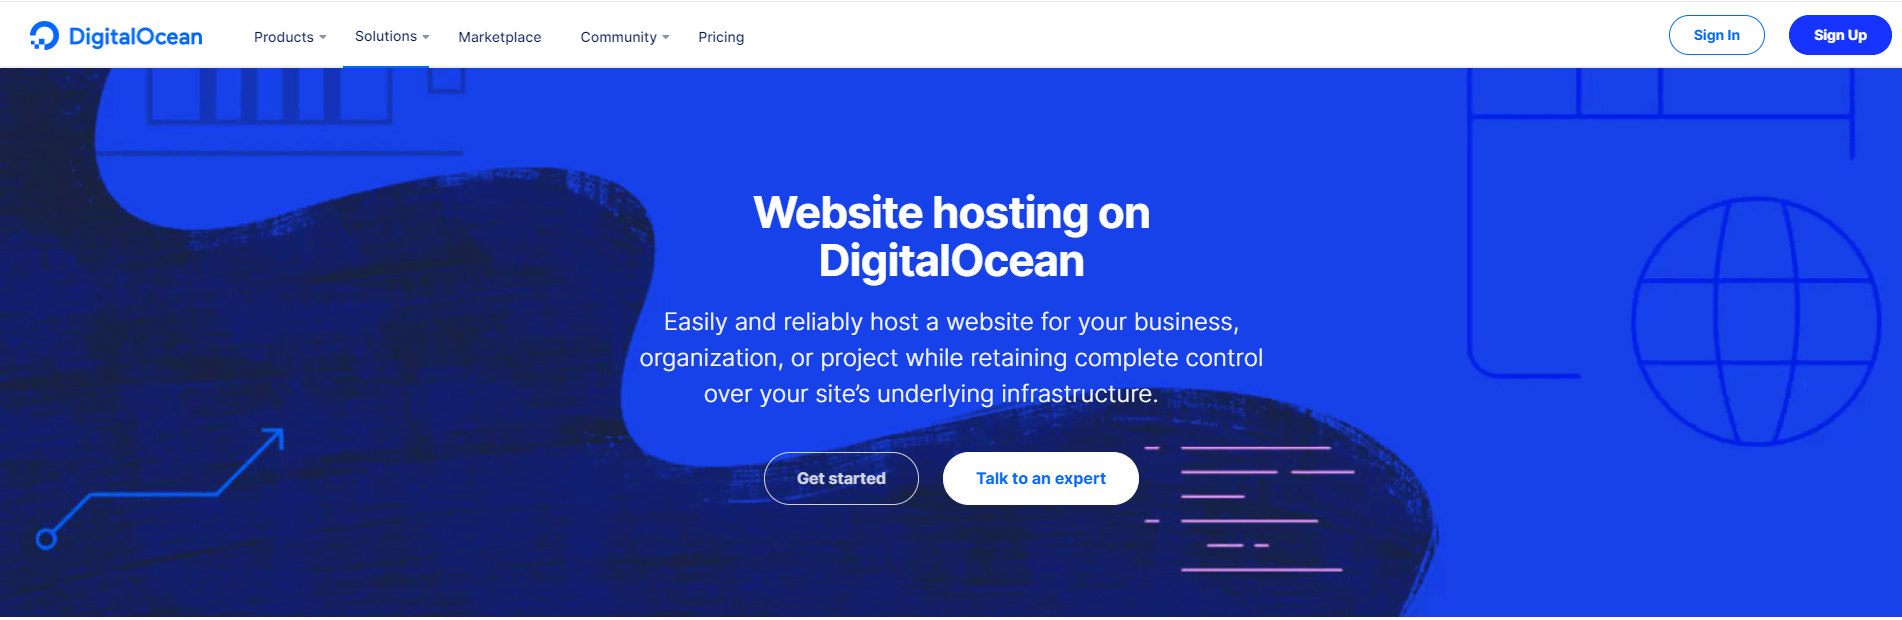 DigitalOcean.com